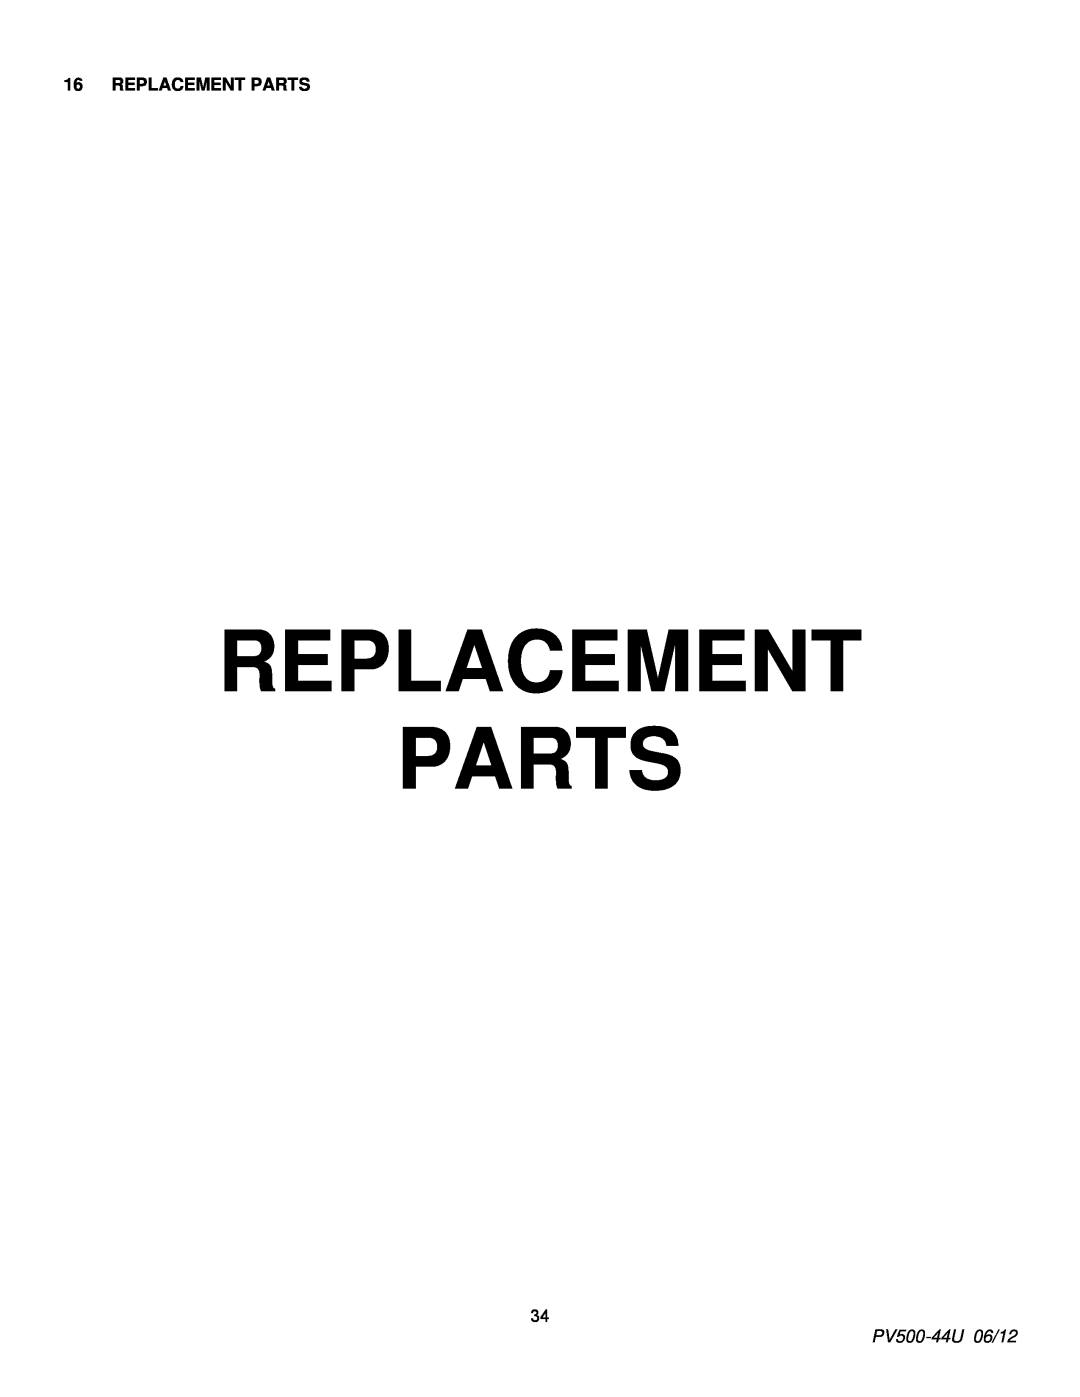 PVI Industries manual Replacement Parts, PV500-44U06/12 